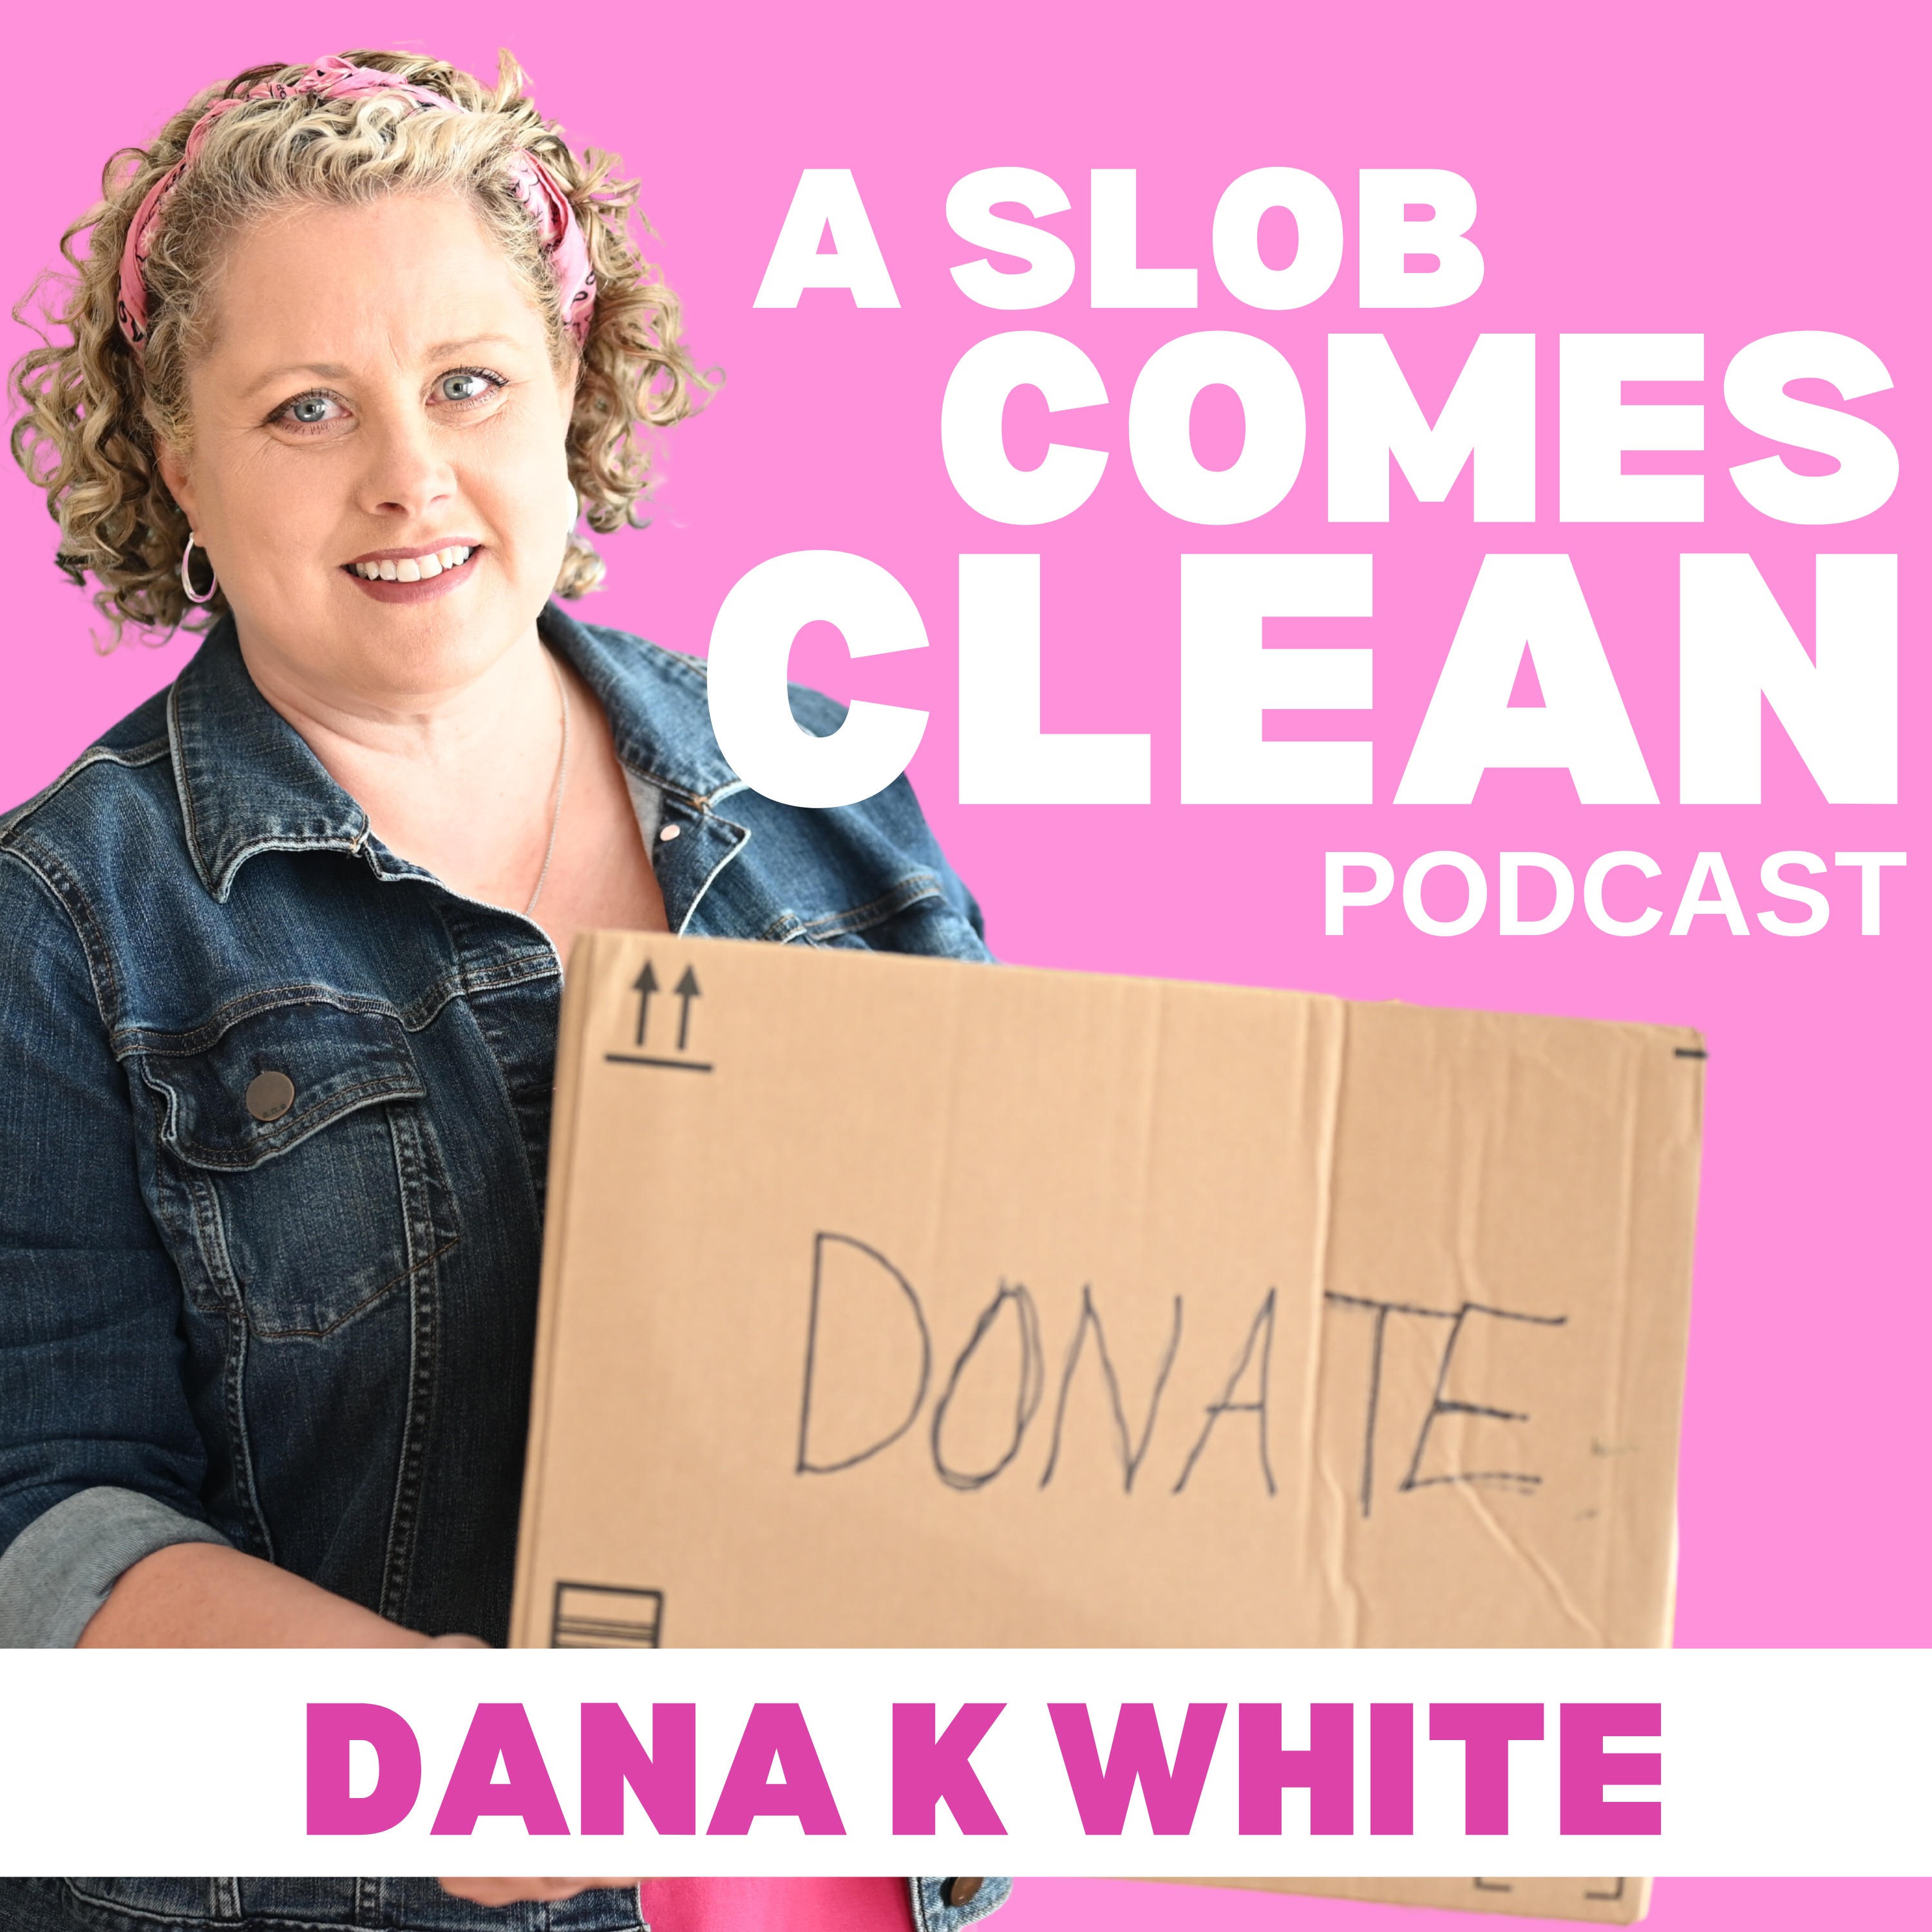 A Slob Comes Clean